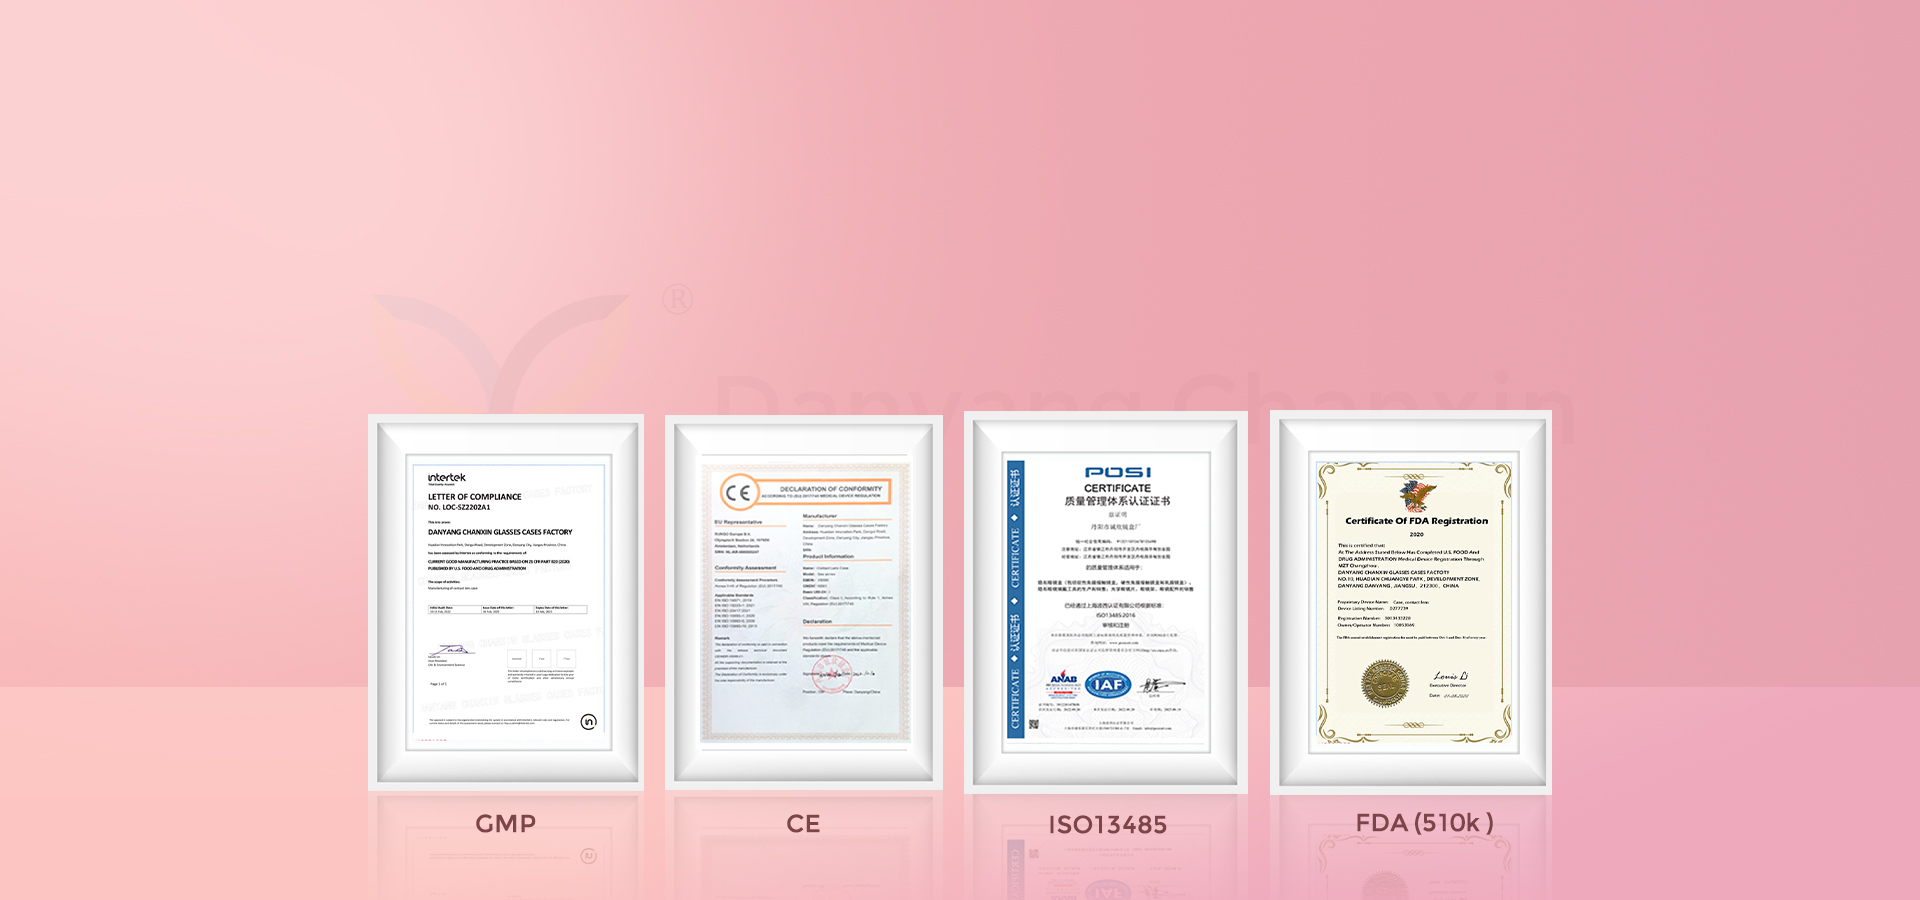 Certificates of Optical Case